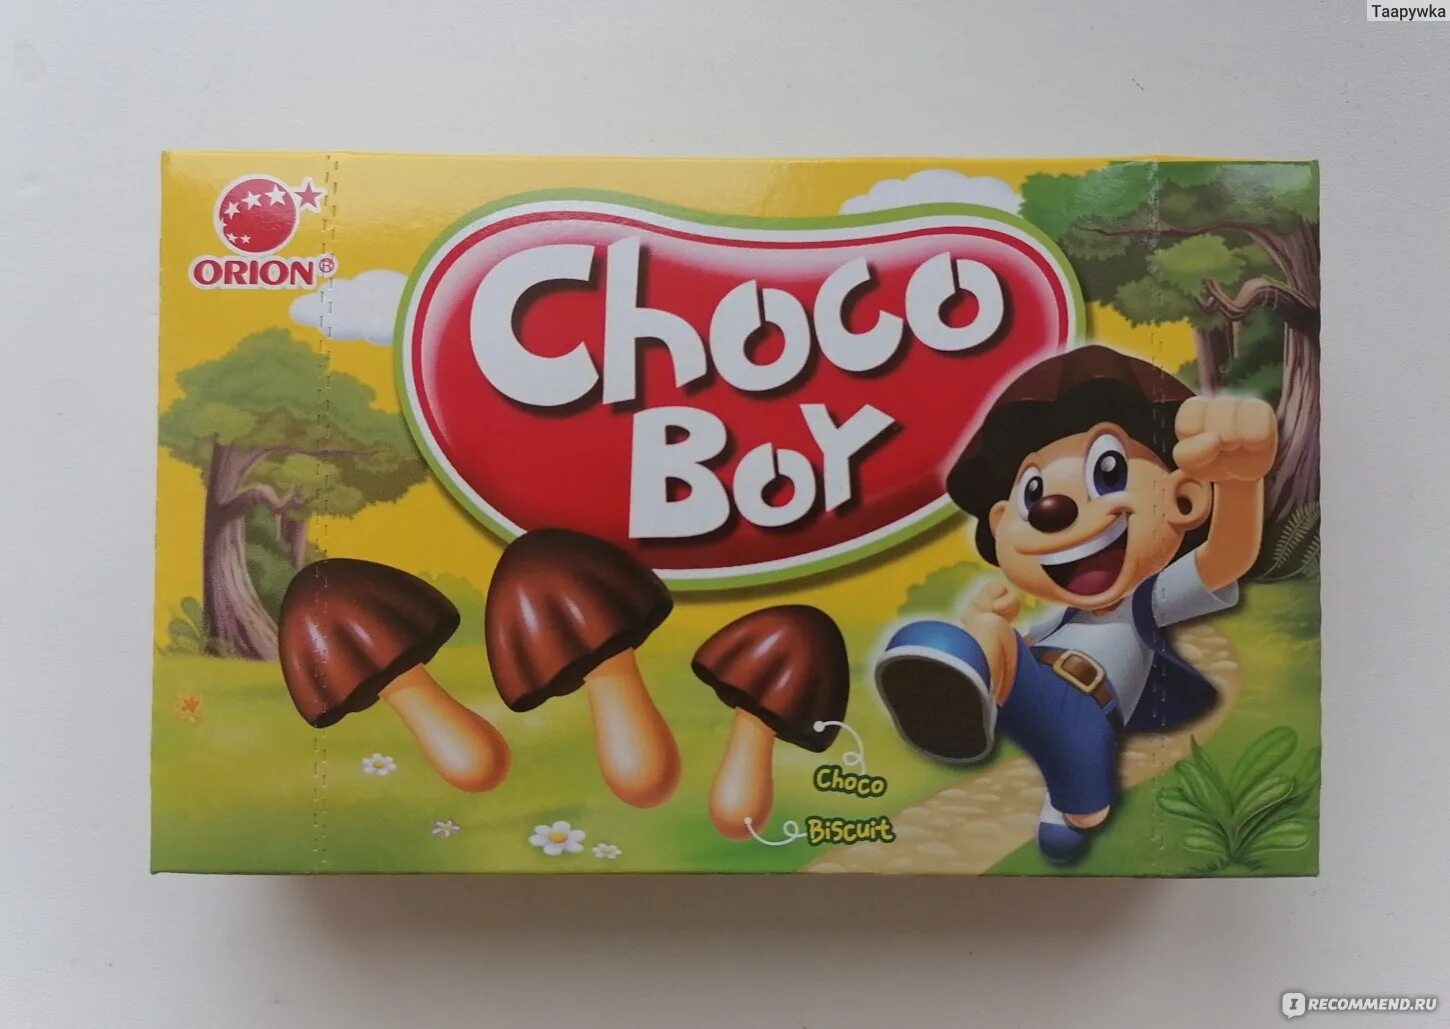 Orion Choco boy печенье 45g. Грибочки Орион Чоко бой. Грибочки шоколадные Choco boy. Choco boy 45 гр. Jelly boy orion